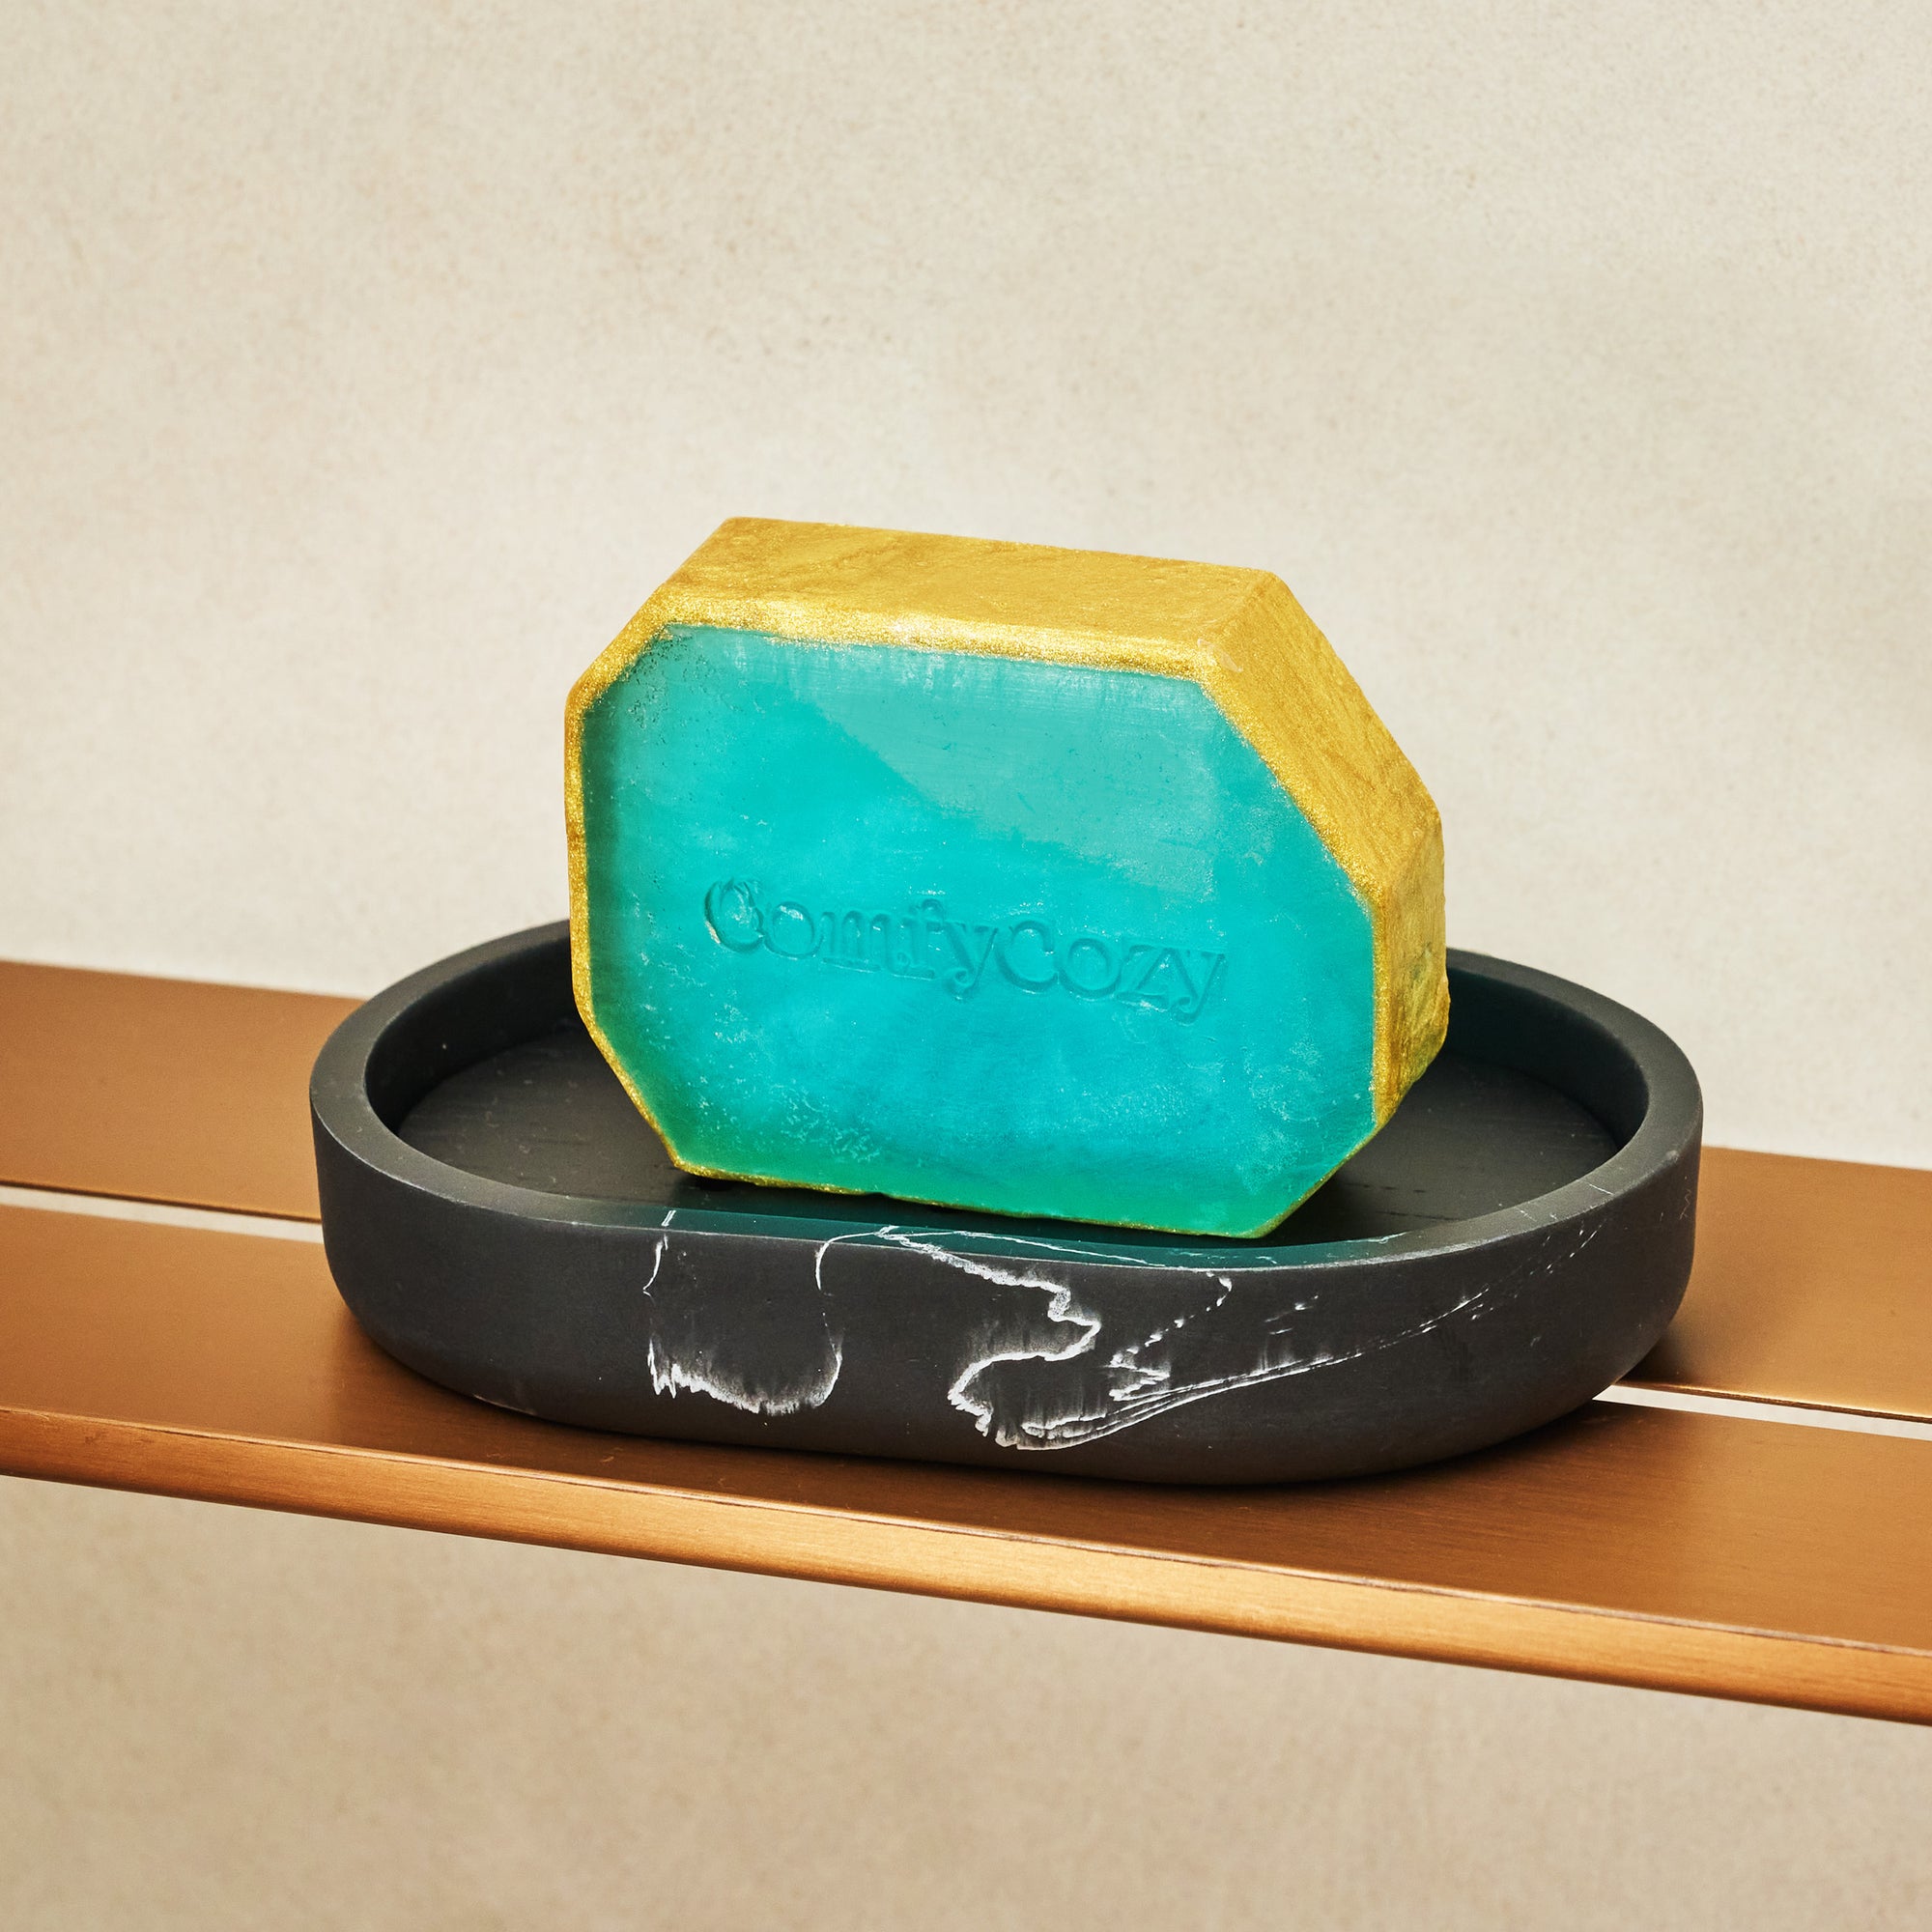 ComfyCozy Crystal Soap Natural Organic Soaps Bars Hand Soap